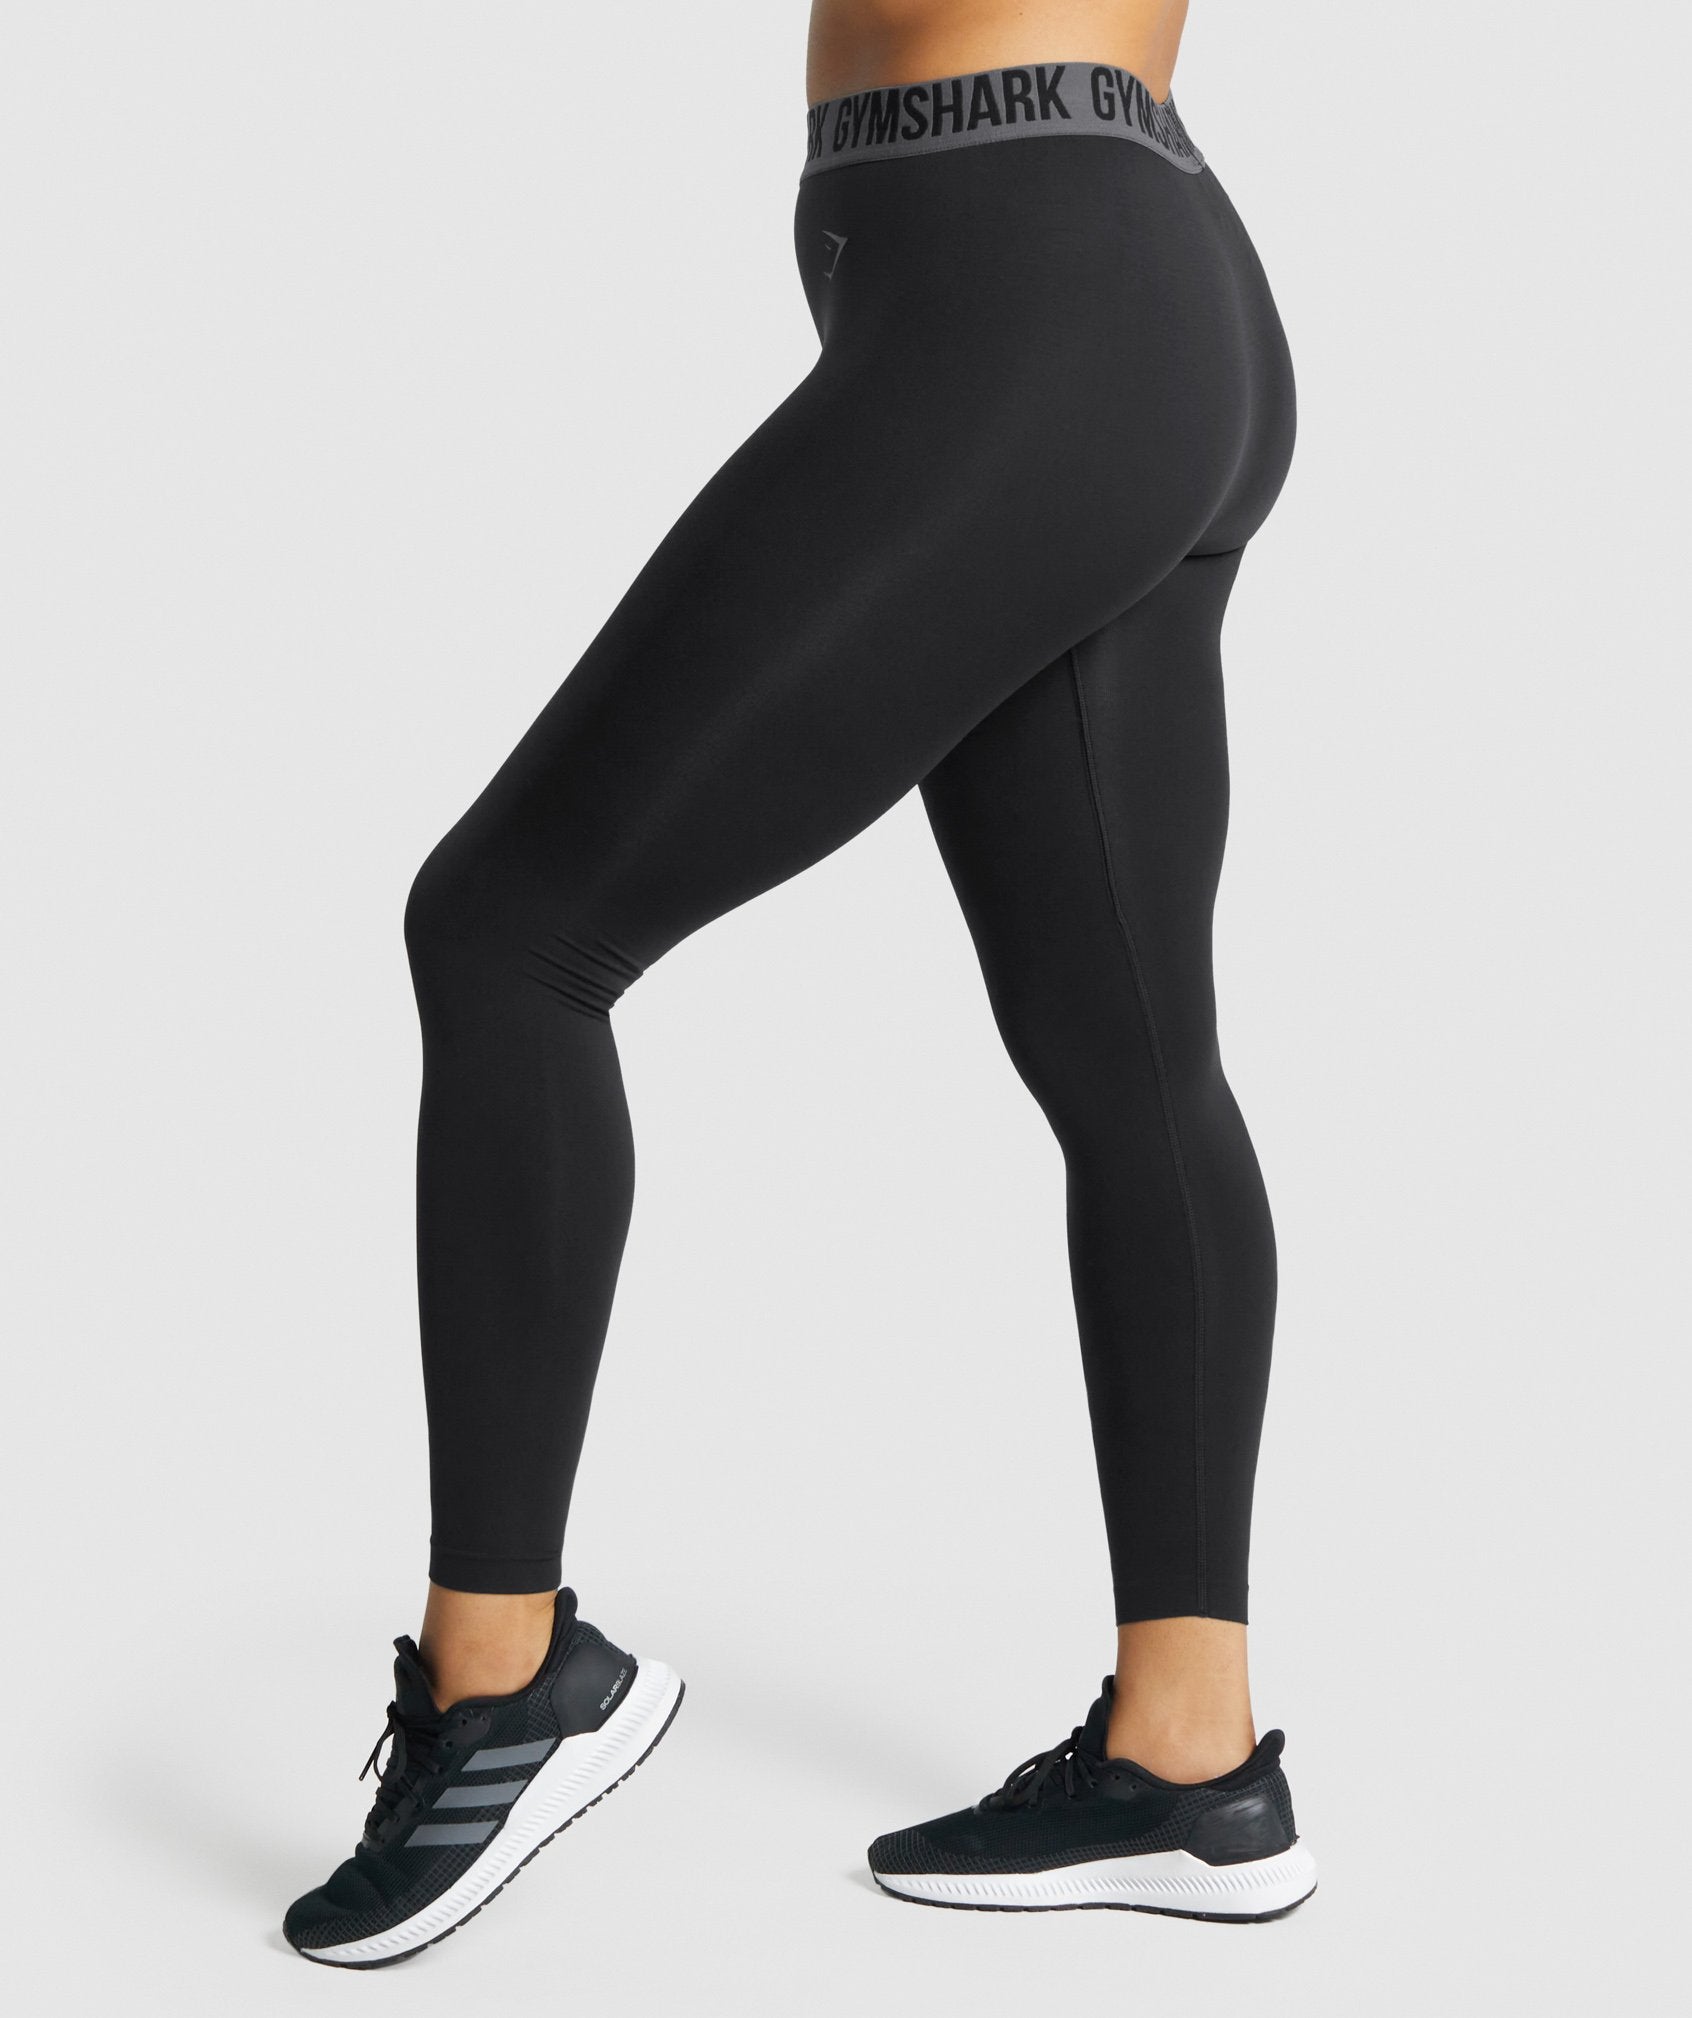 Gymshark leggings available Price 15000 Size medium 0754553666